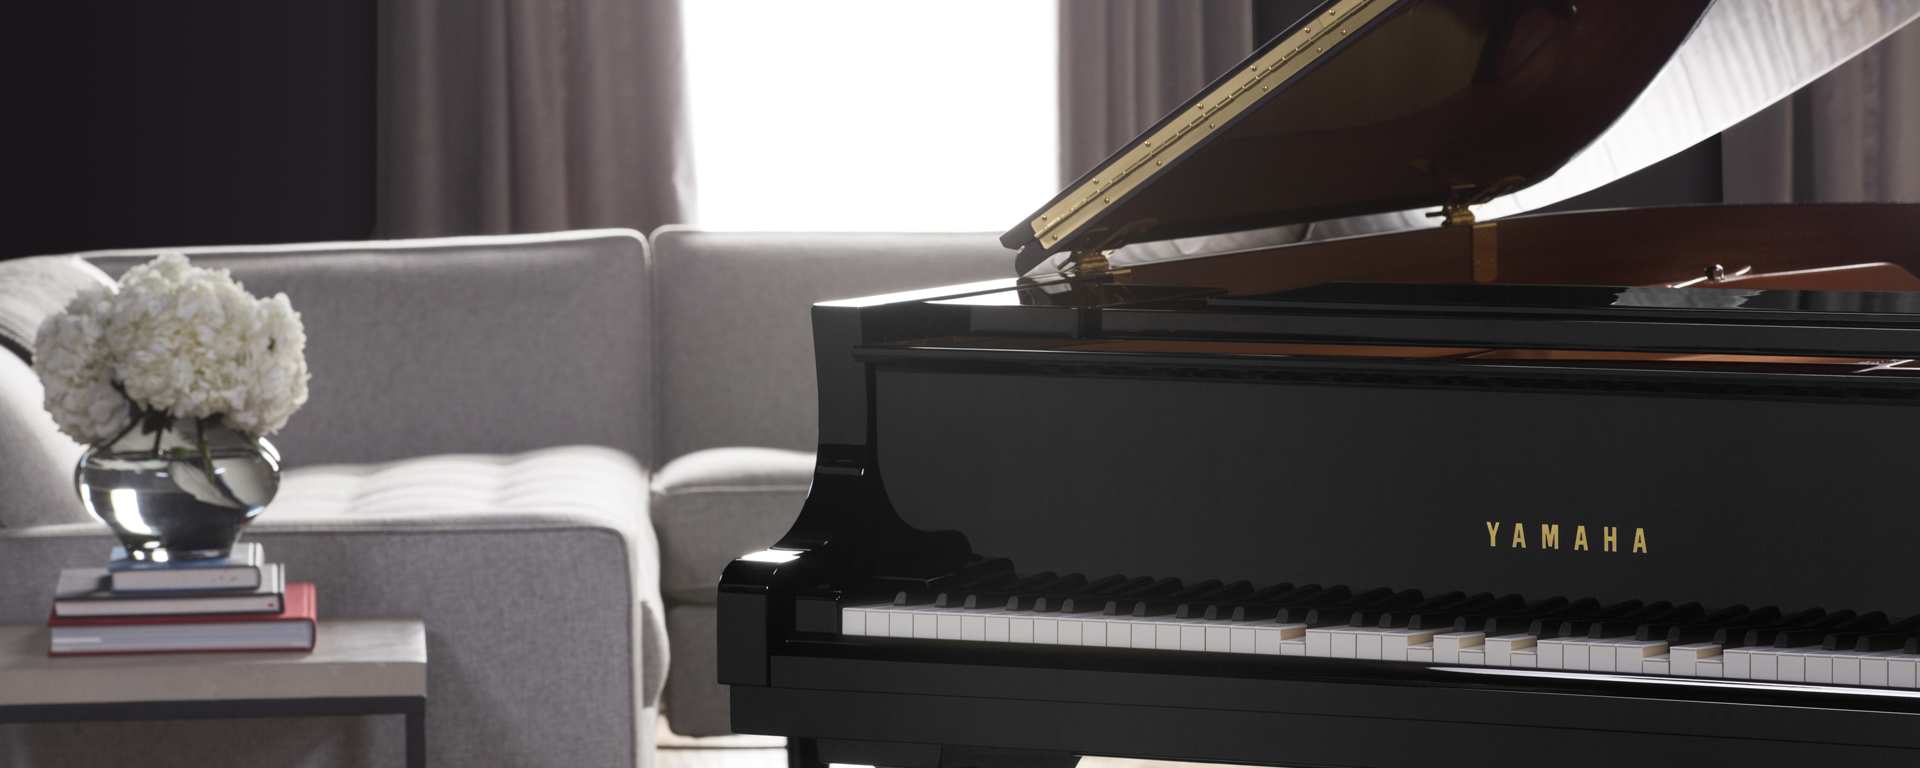 Yamaha Disklavier™ Reproducing Player Piano Technology